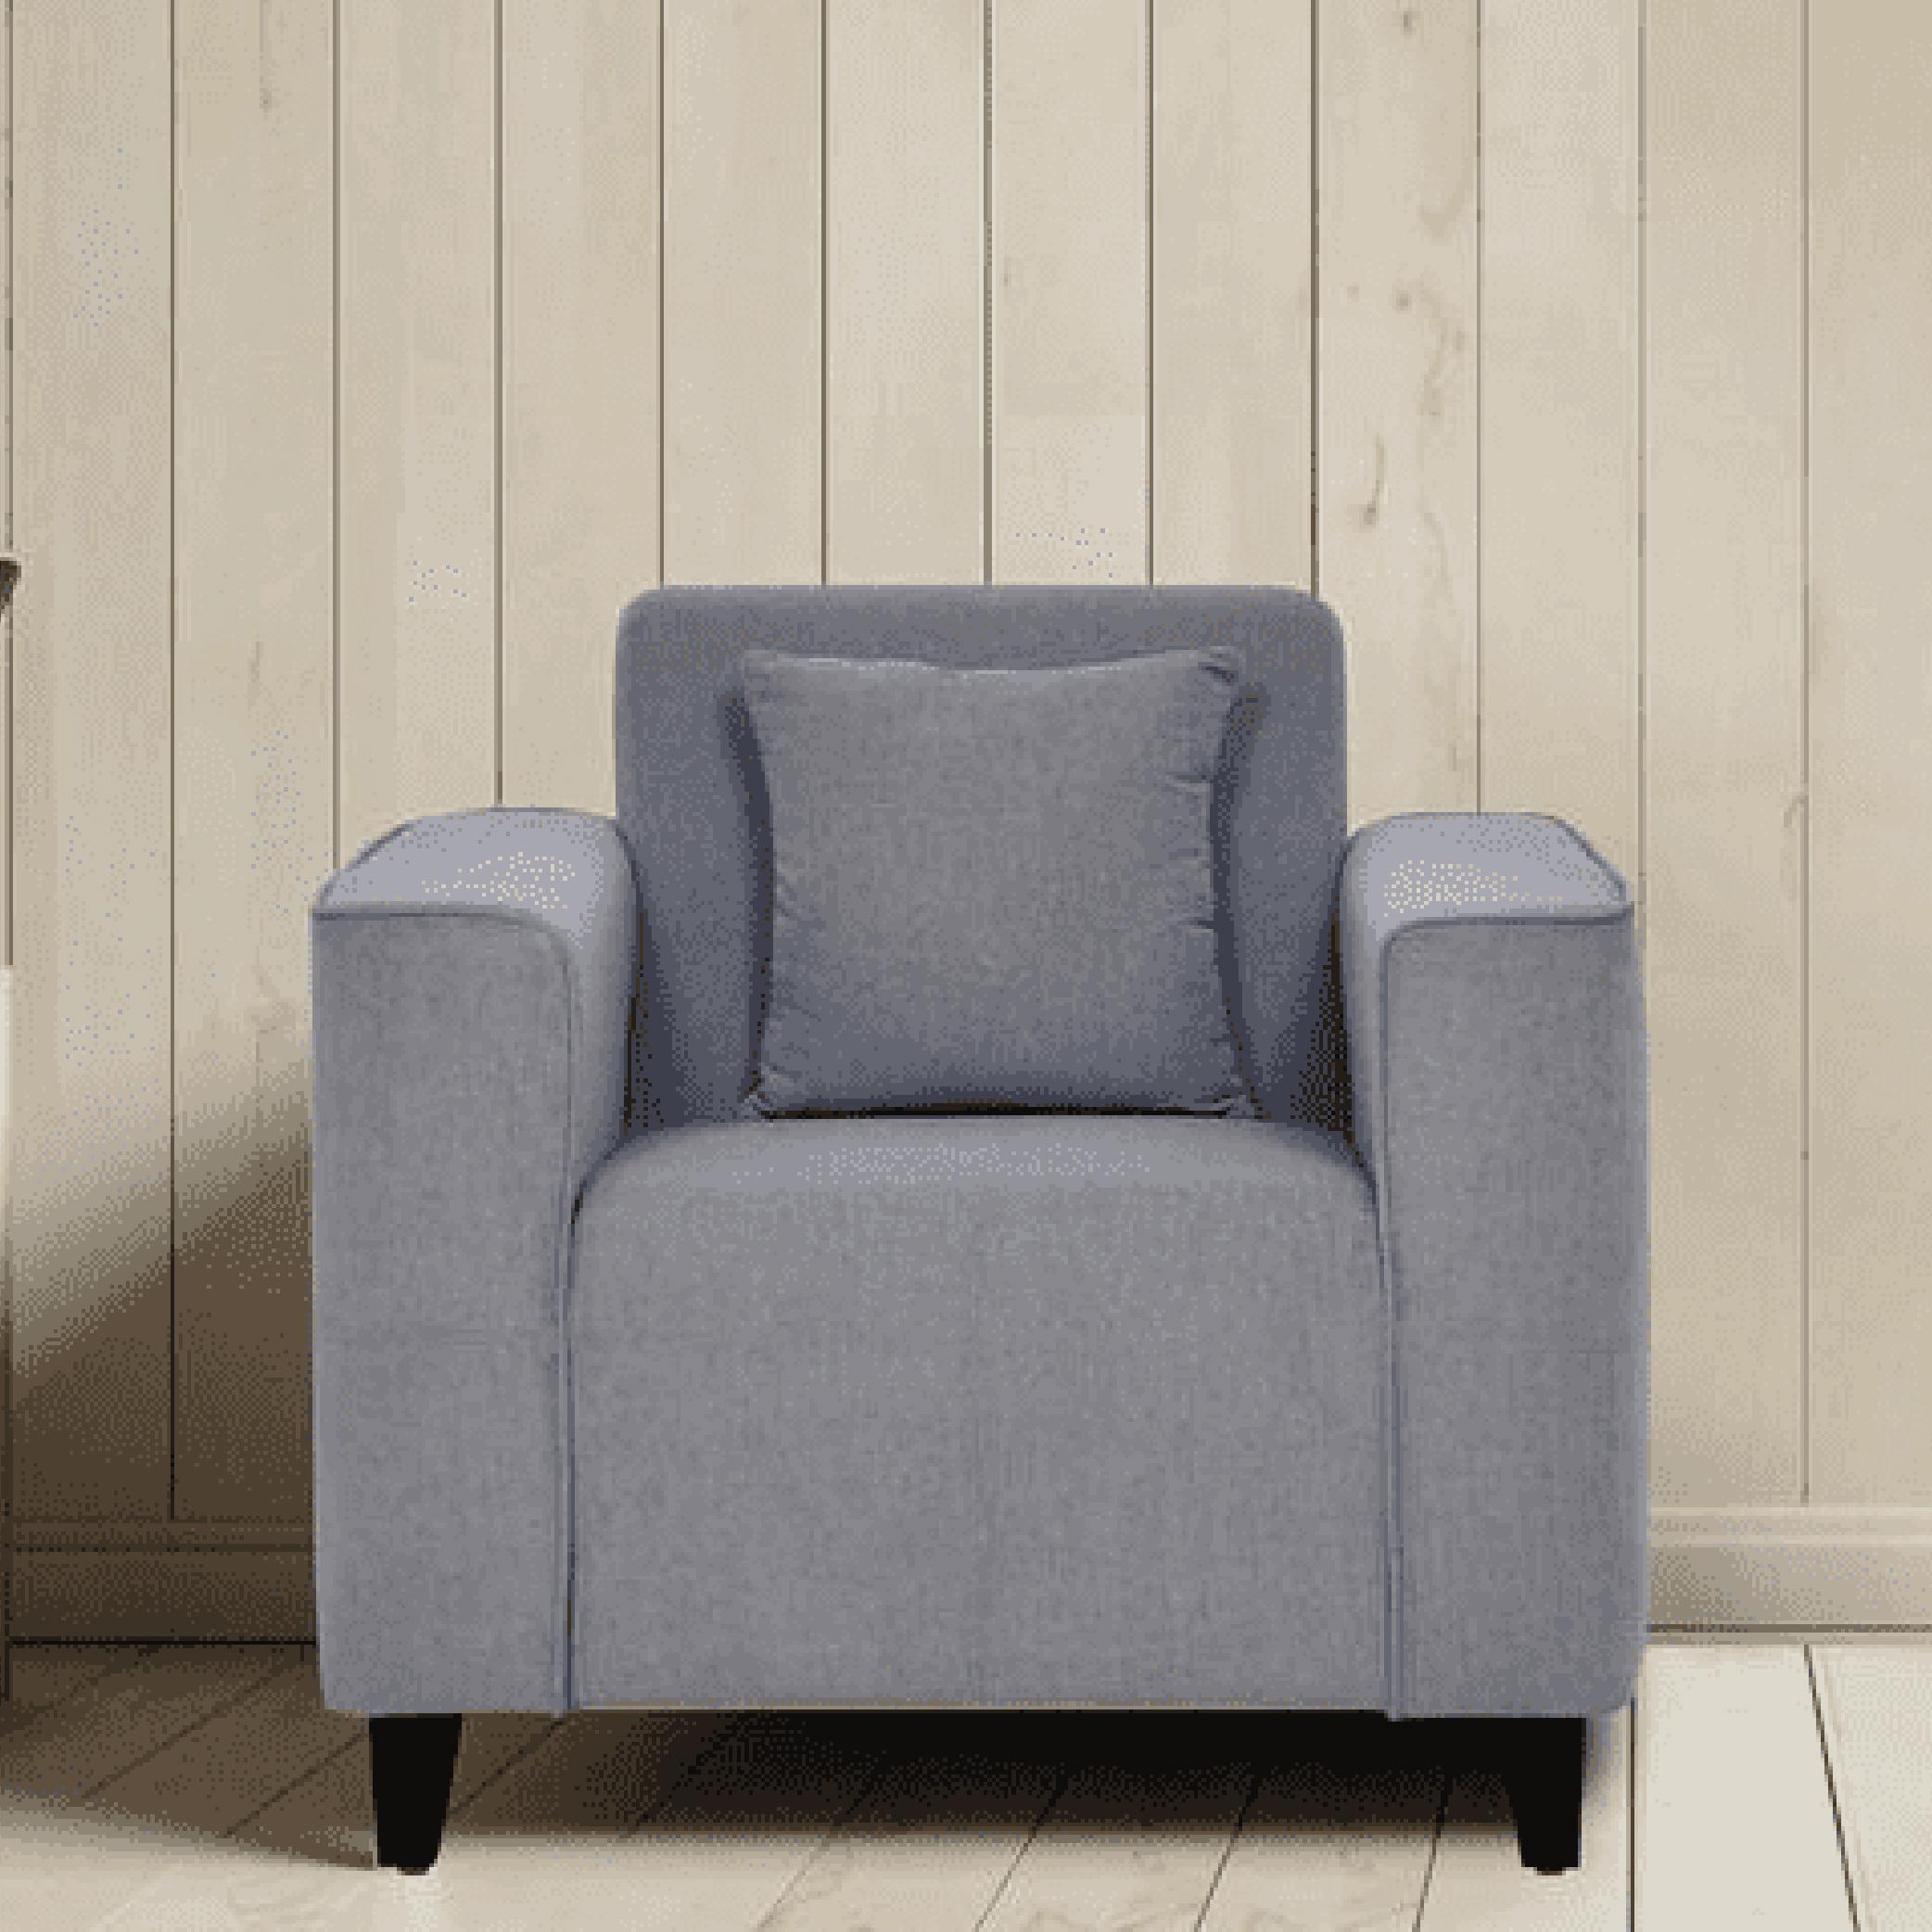 Faenza one Seater Sofa in Ash Grey Colour